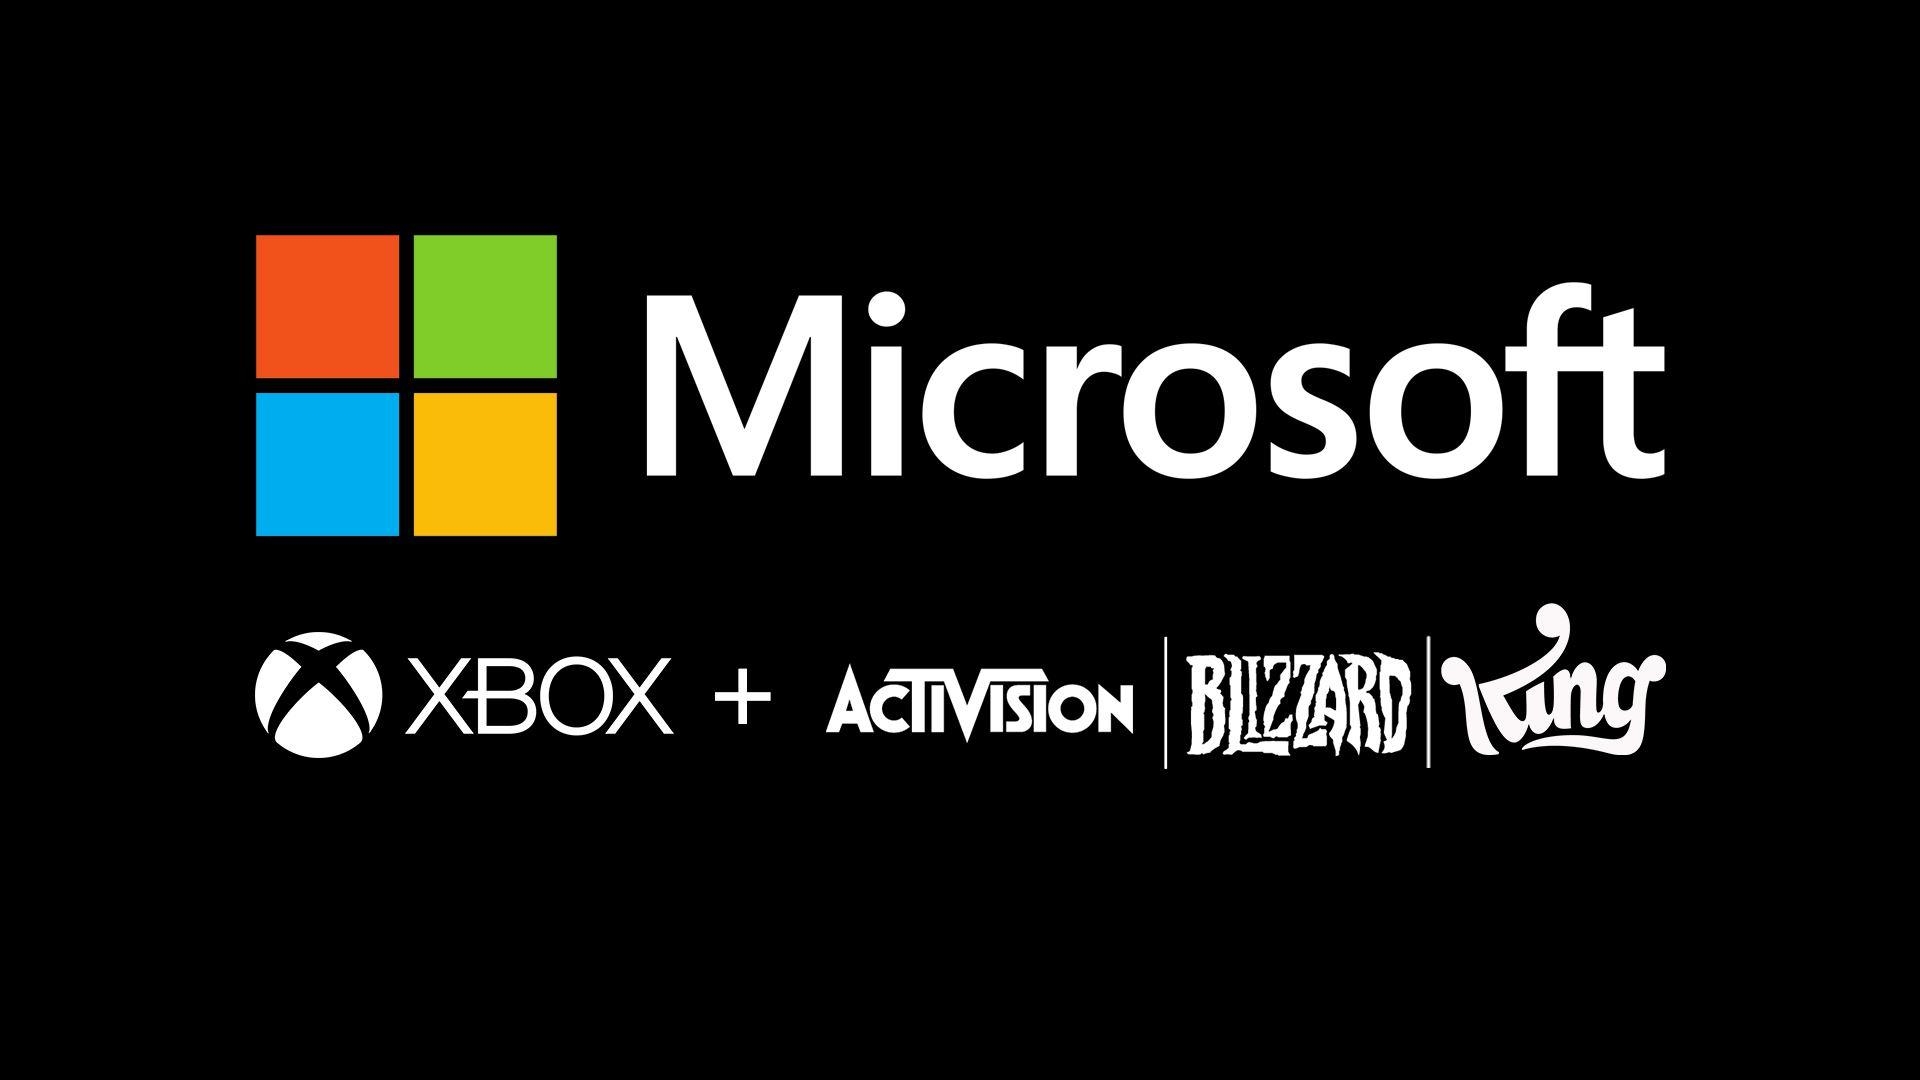 Microsoft will acquire Activision Blizzard Inc. for $68.7 billion | DeviceDaily.com